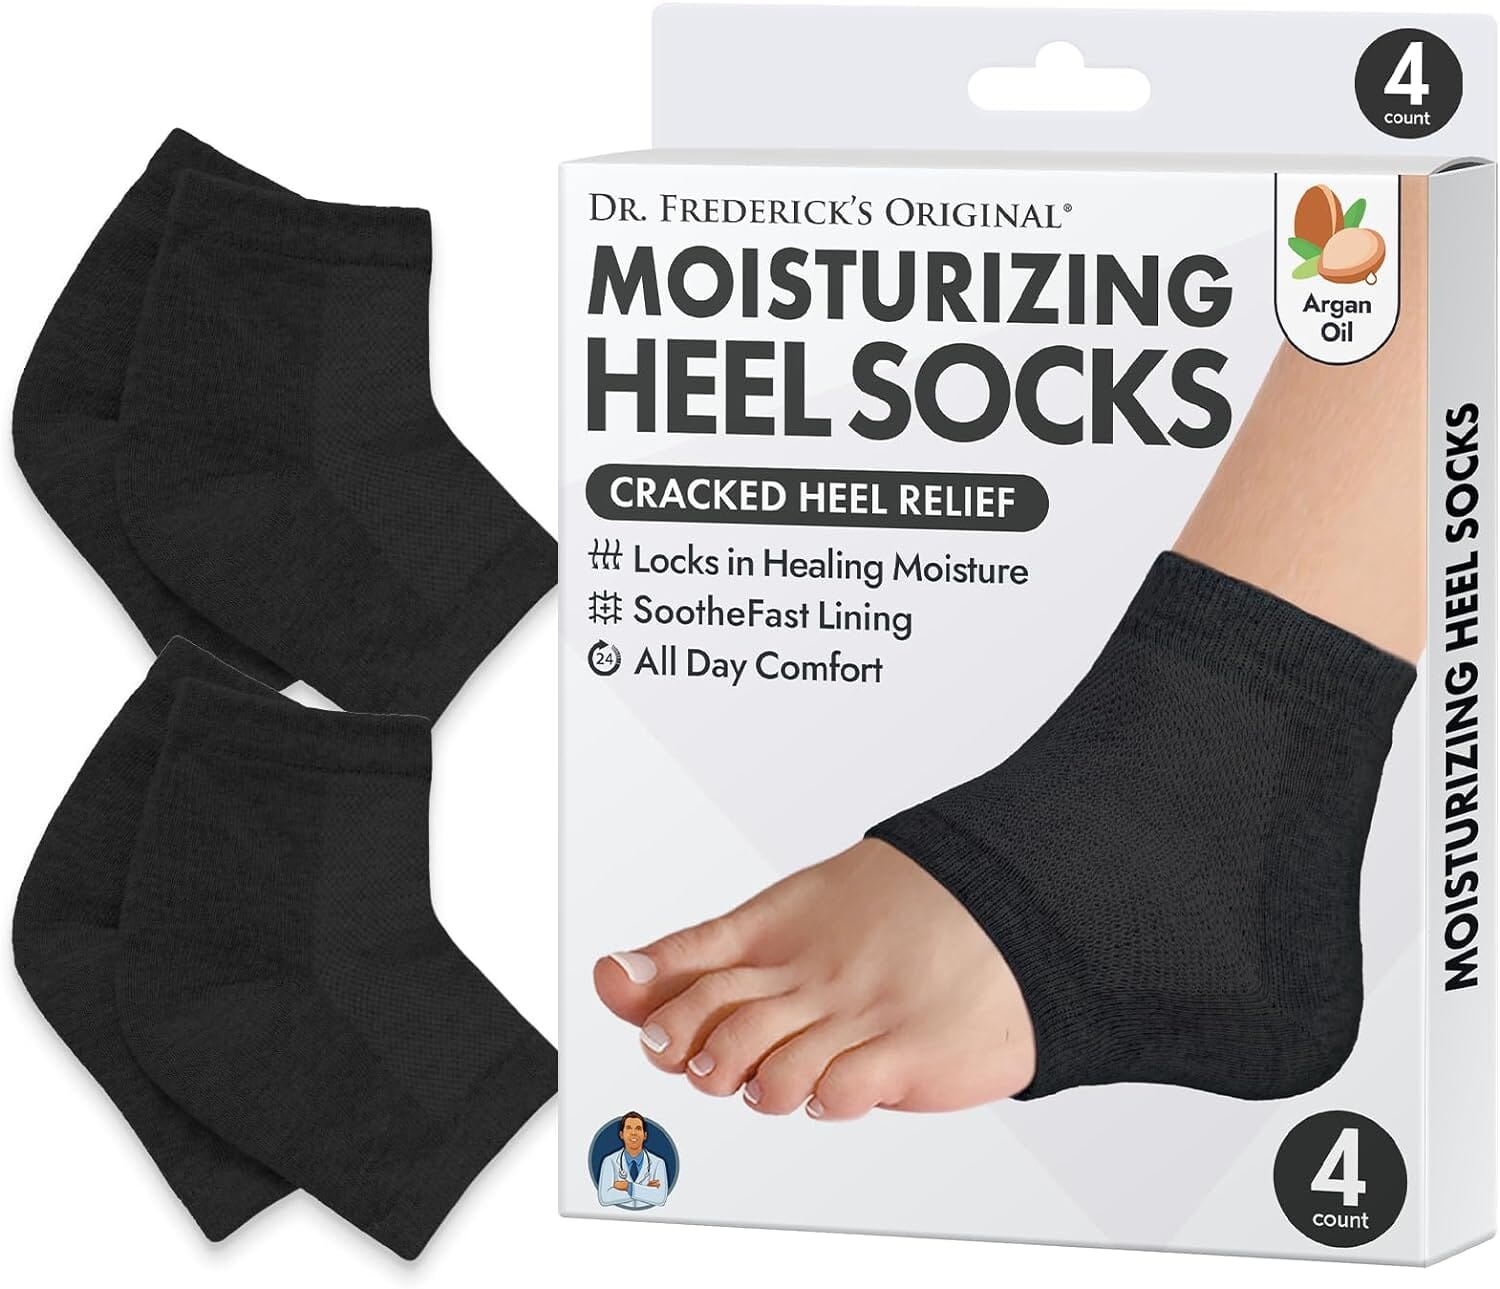 Dr. Frederick's Original Moisturizing Heel Socks - 2 Pairs - for